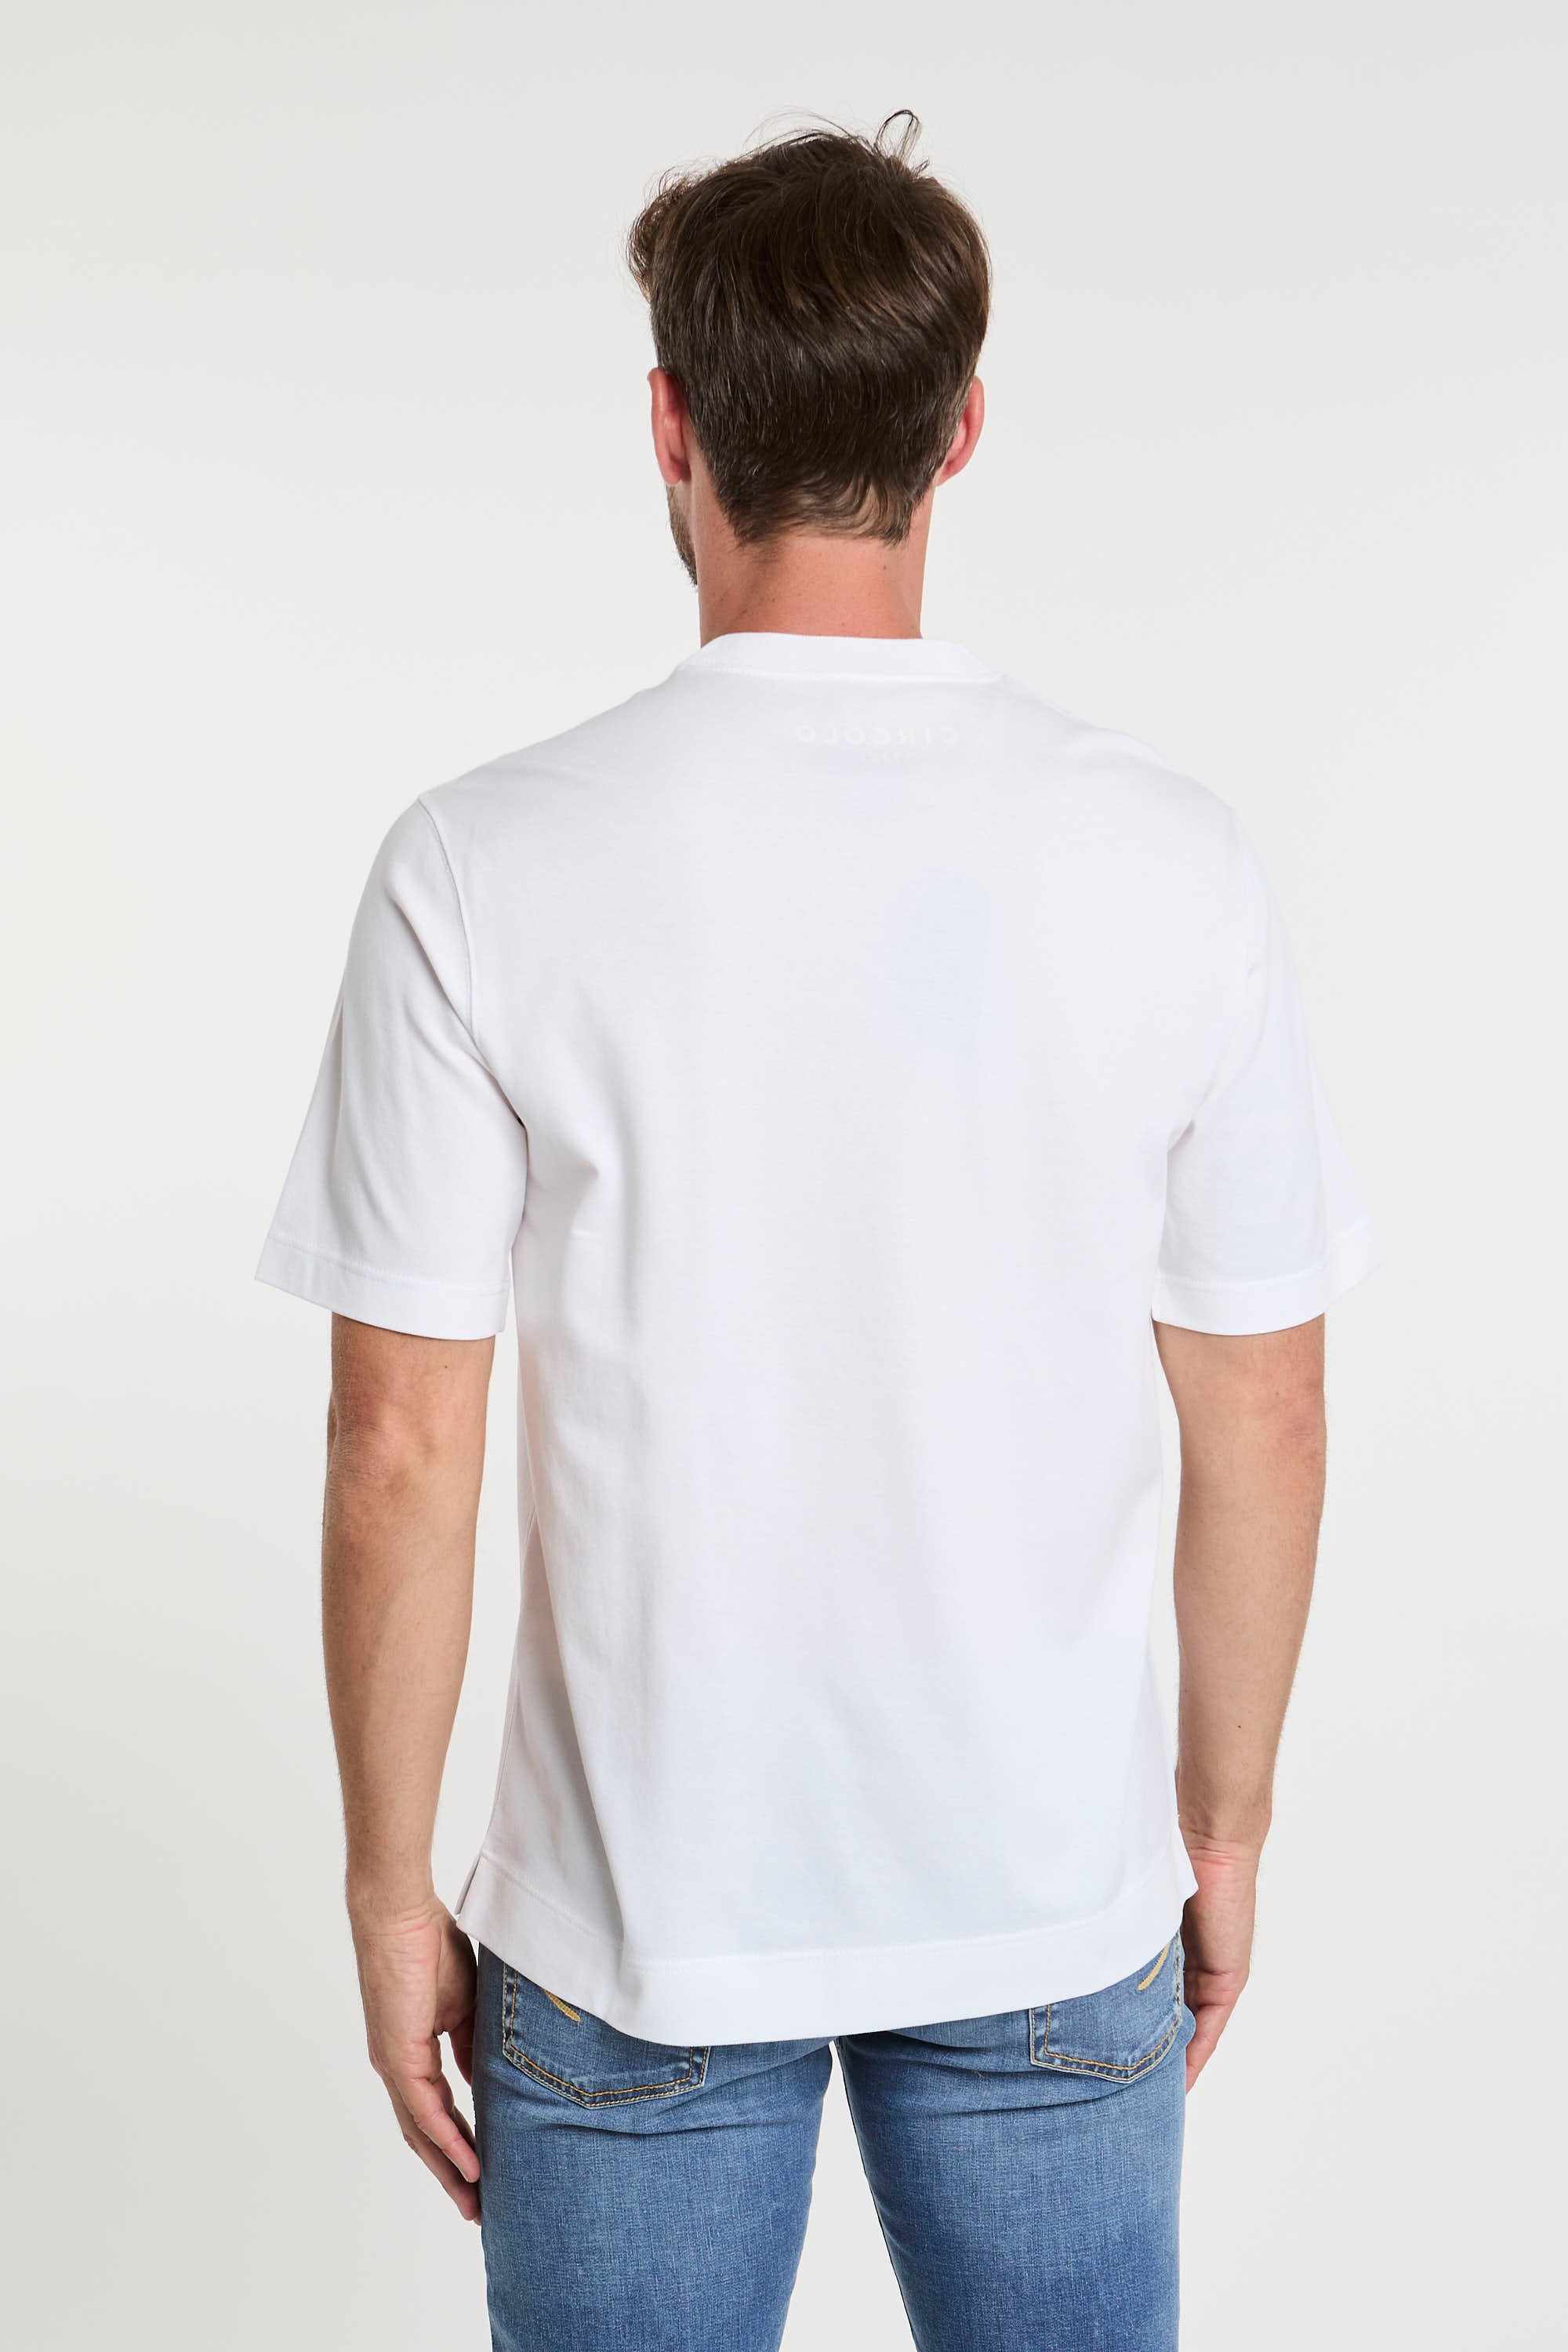 Circolo 1901 T-Shirt Cotton White 6505-6